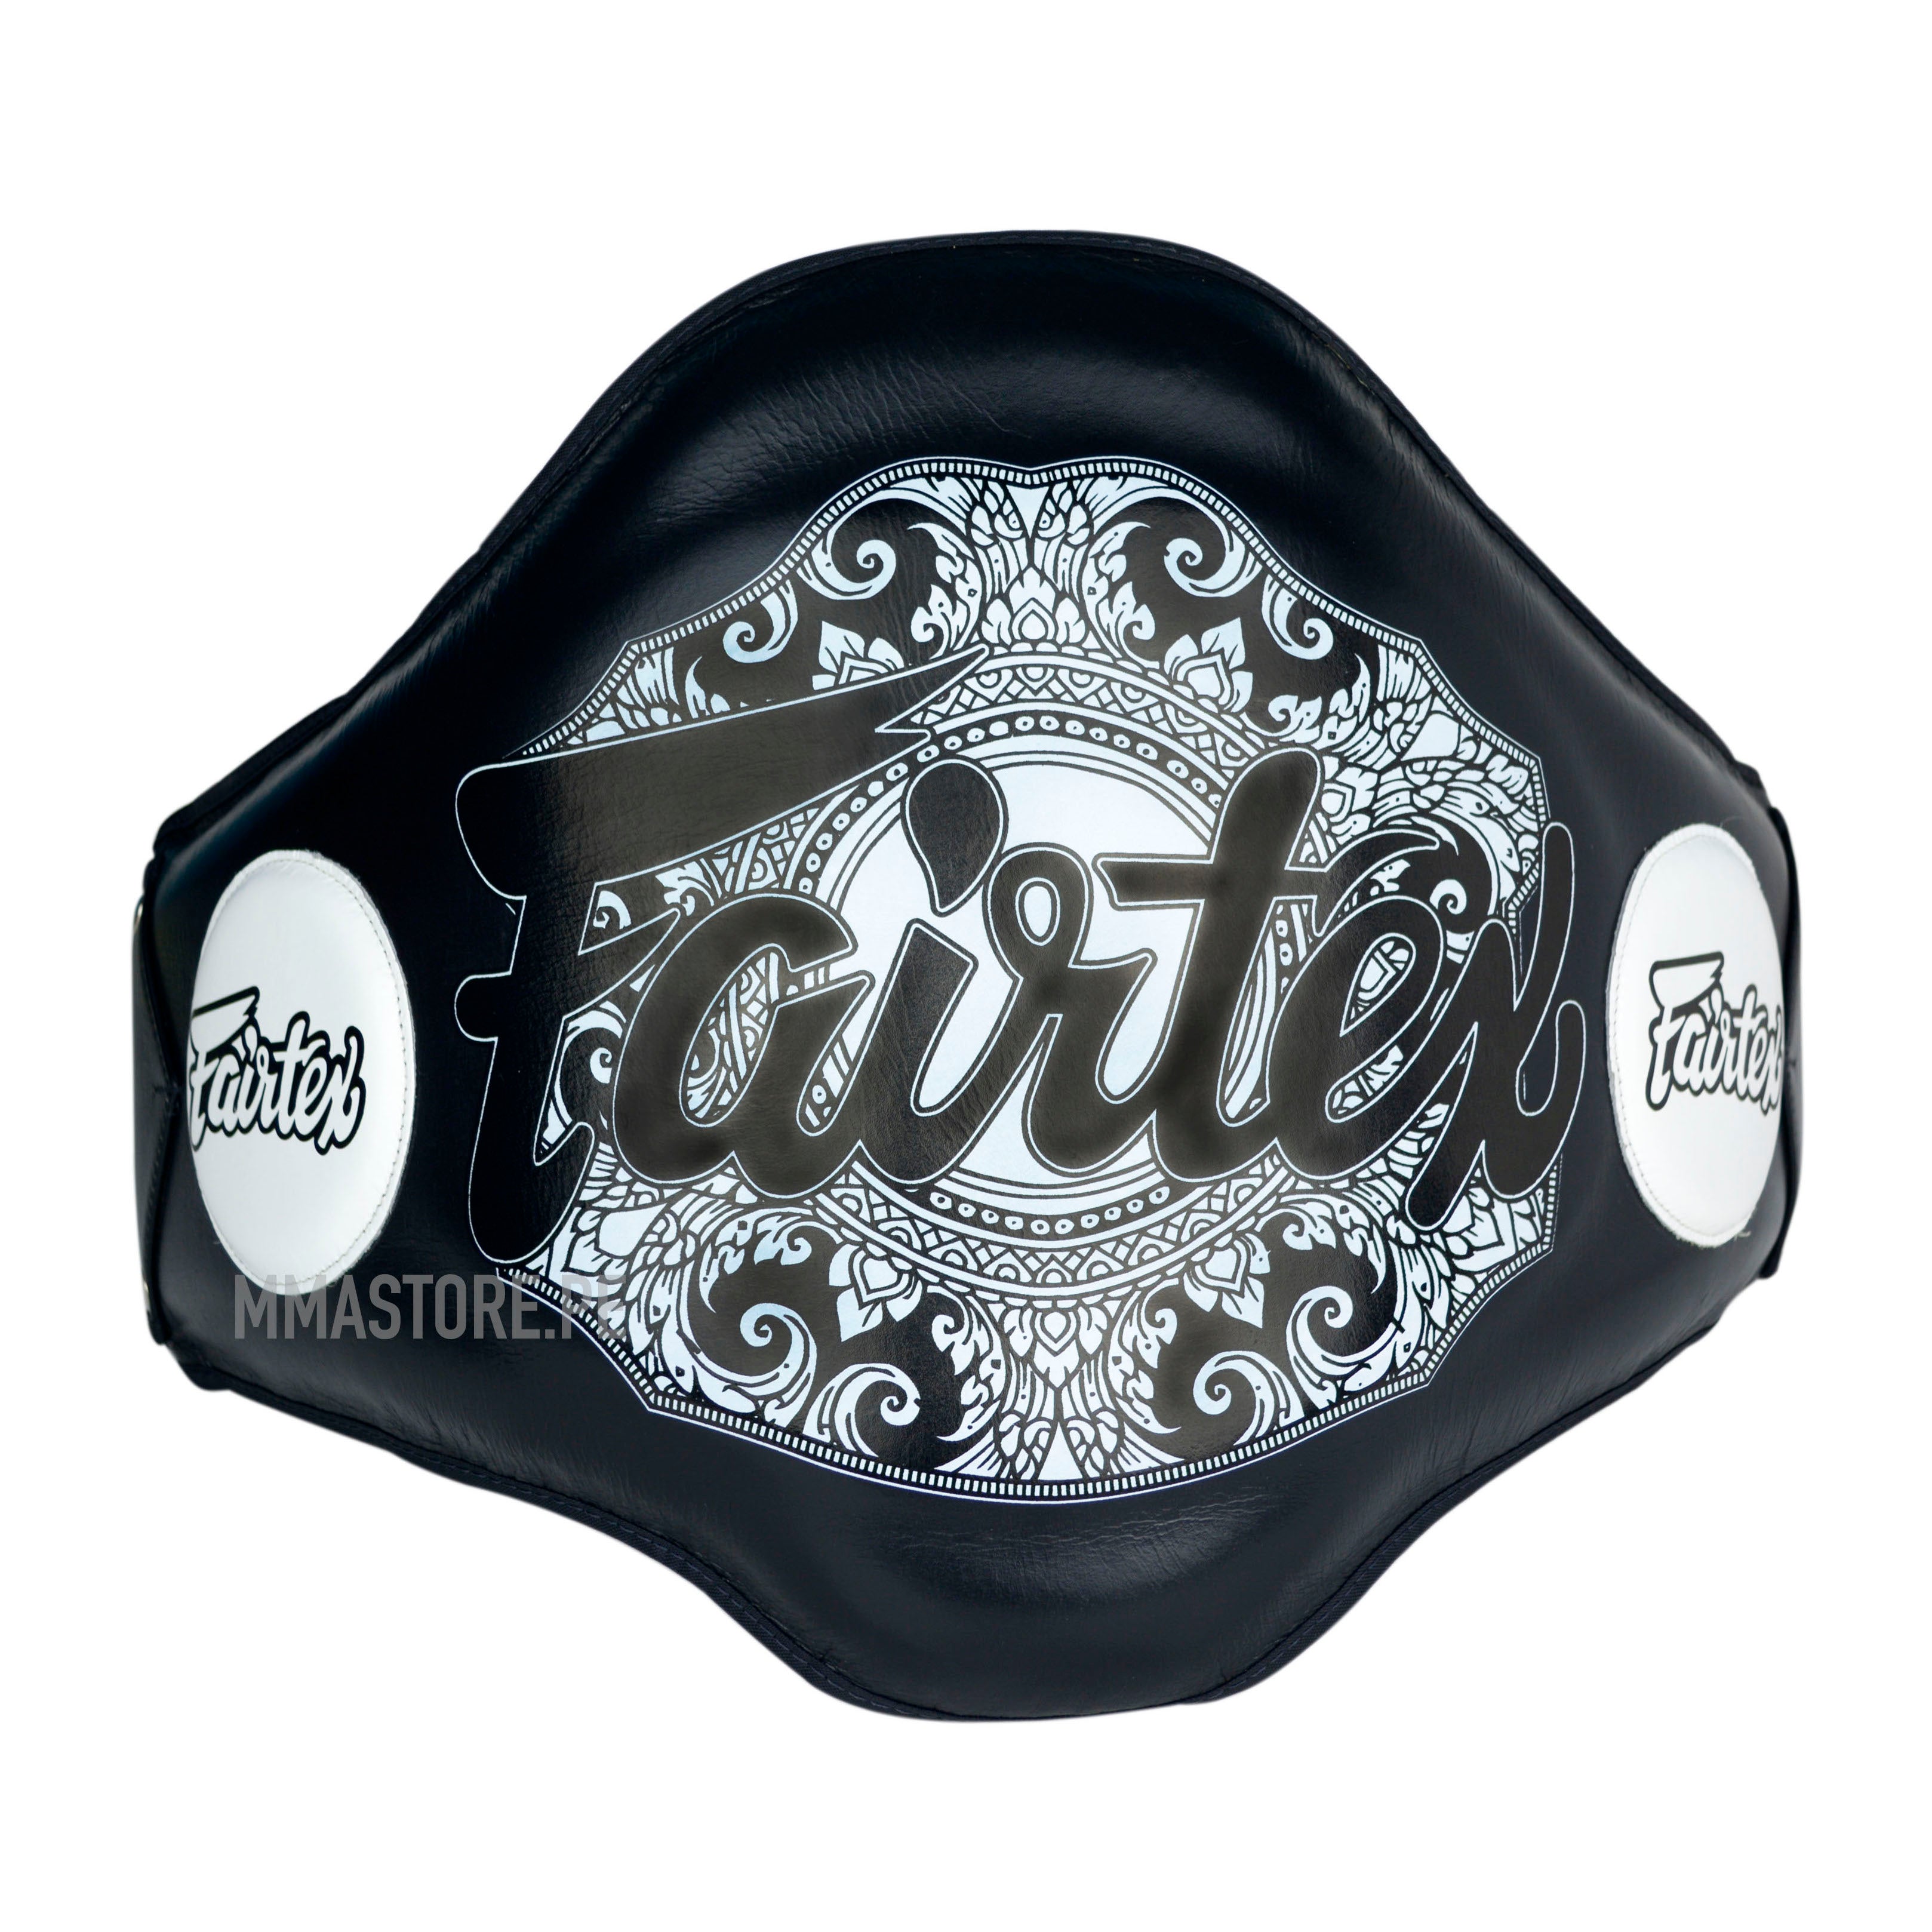 Cinturon Belly Pad Fairtex Champion Negro - Muay Thai - Boxeo - 100% Cuero - MMA Store Peru